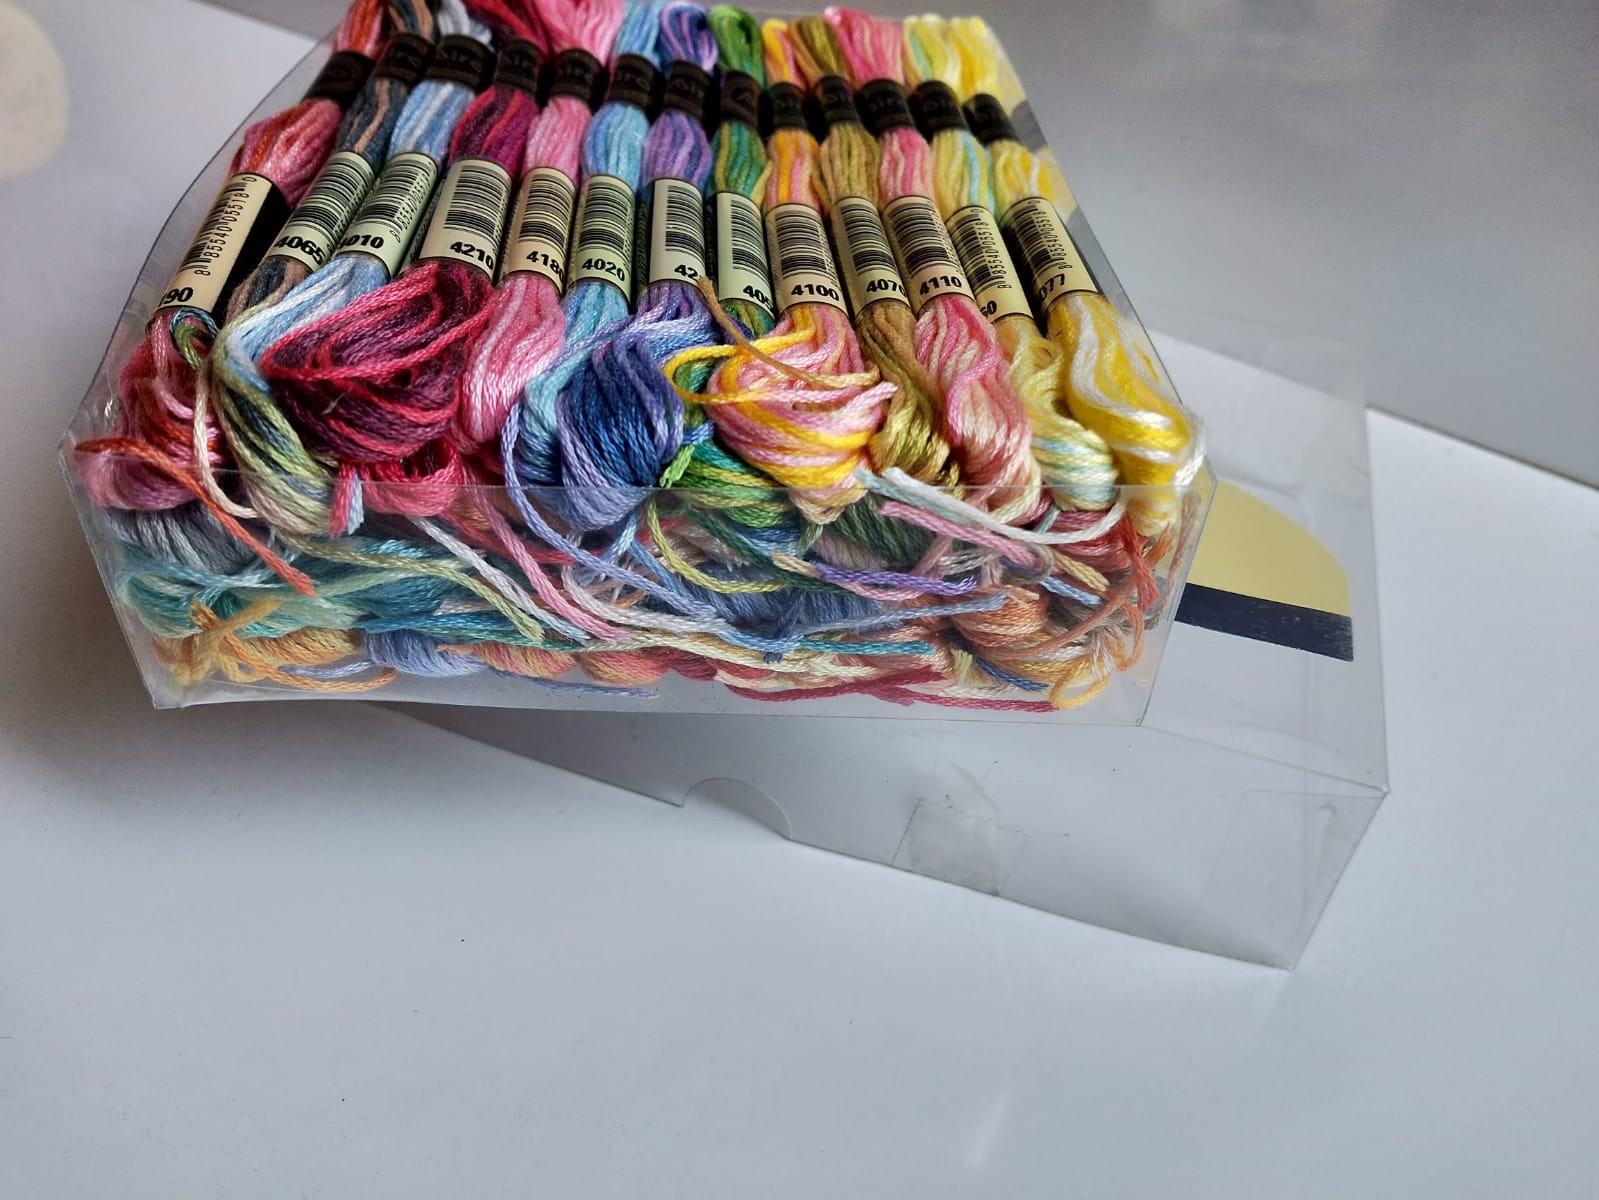 Airo Embroidery Thread Set 50 Modal 3